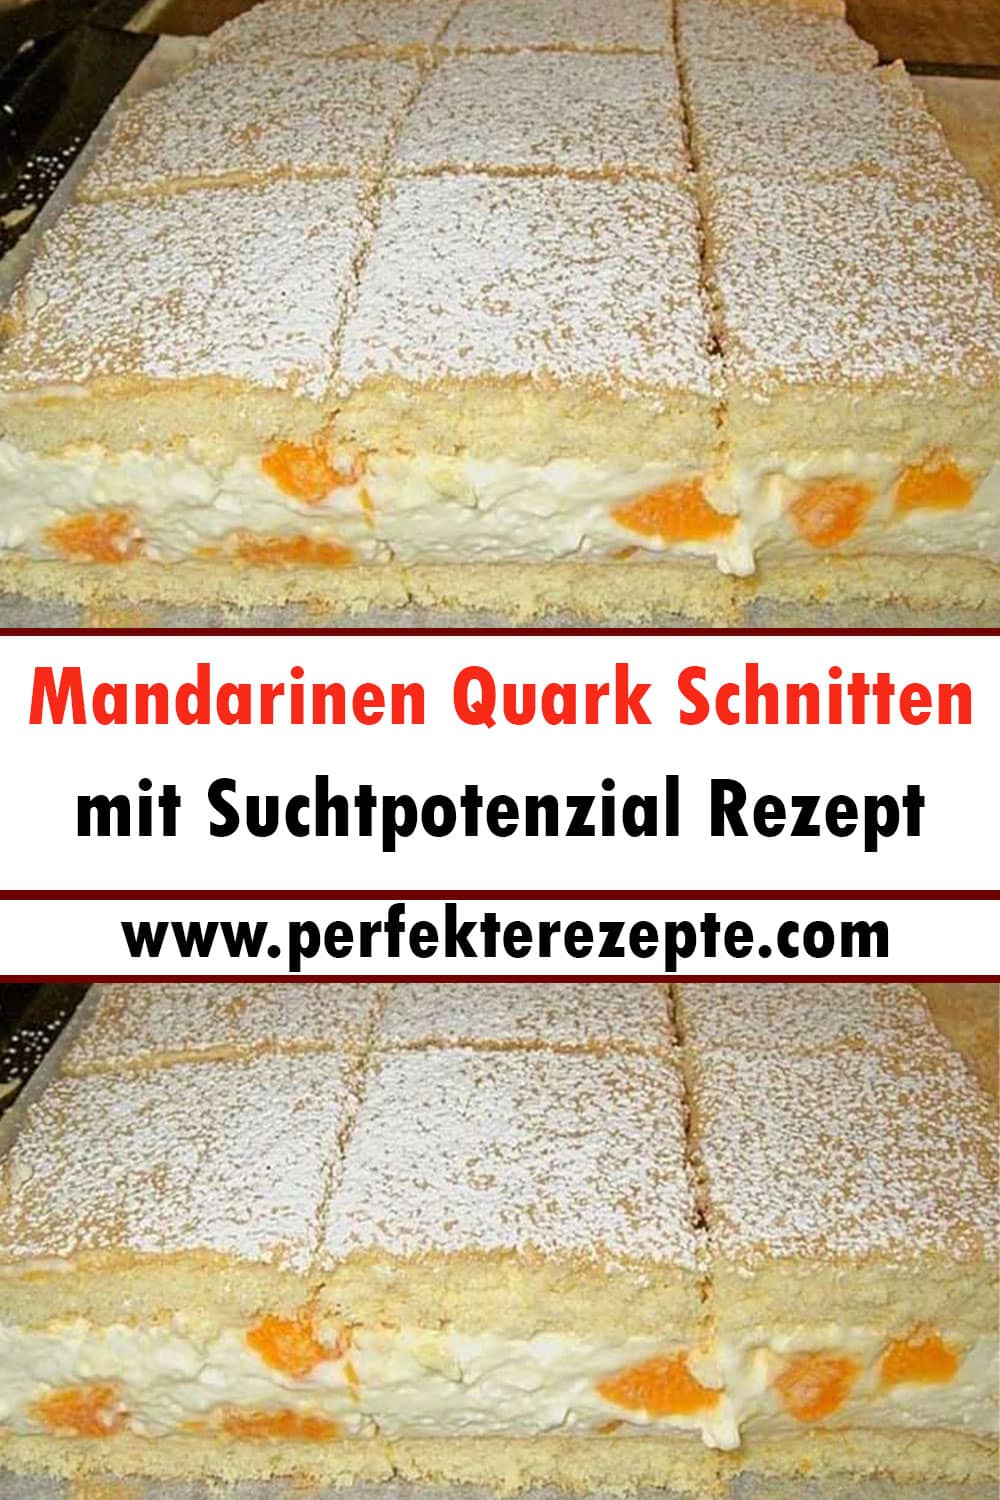 Mandarinen Quark Schnitten mit Suchtpotenzial Rezept